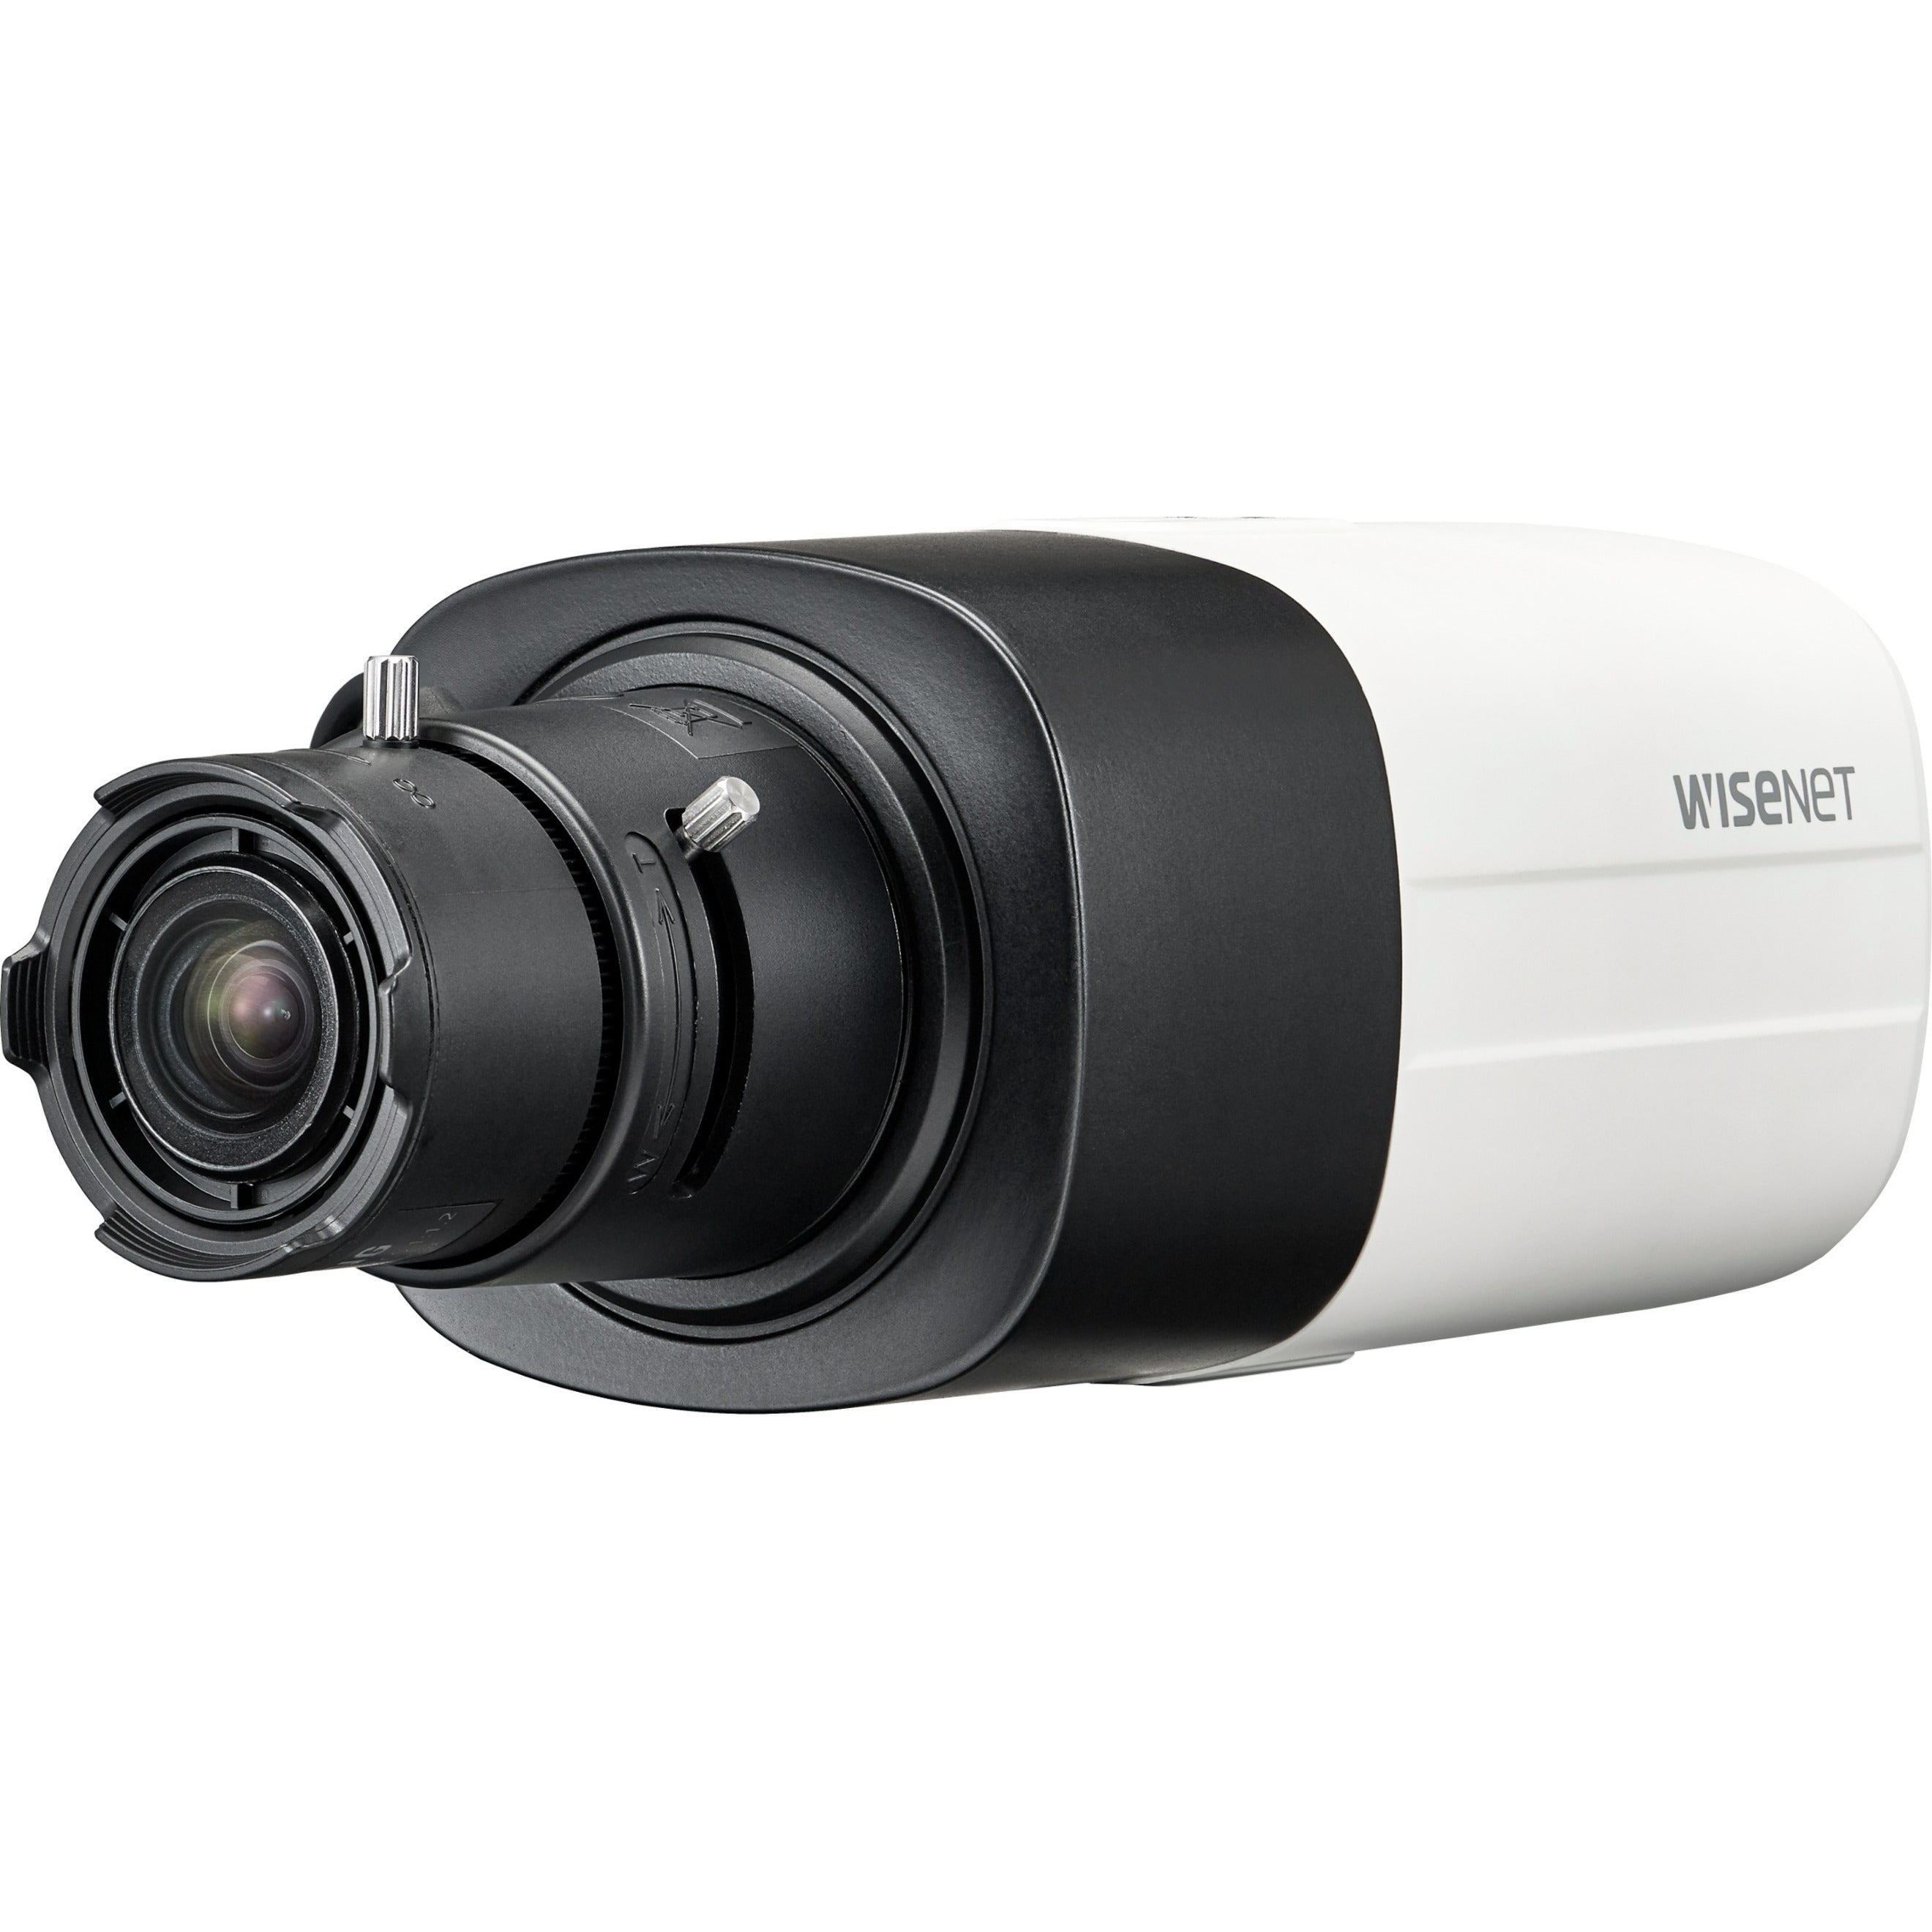 Wisenet SCB-6005 1080p Full HD Analog Box Camera, 2MP, 30fps, D/N, RS485/Coaxial Control